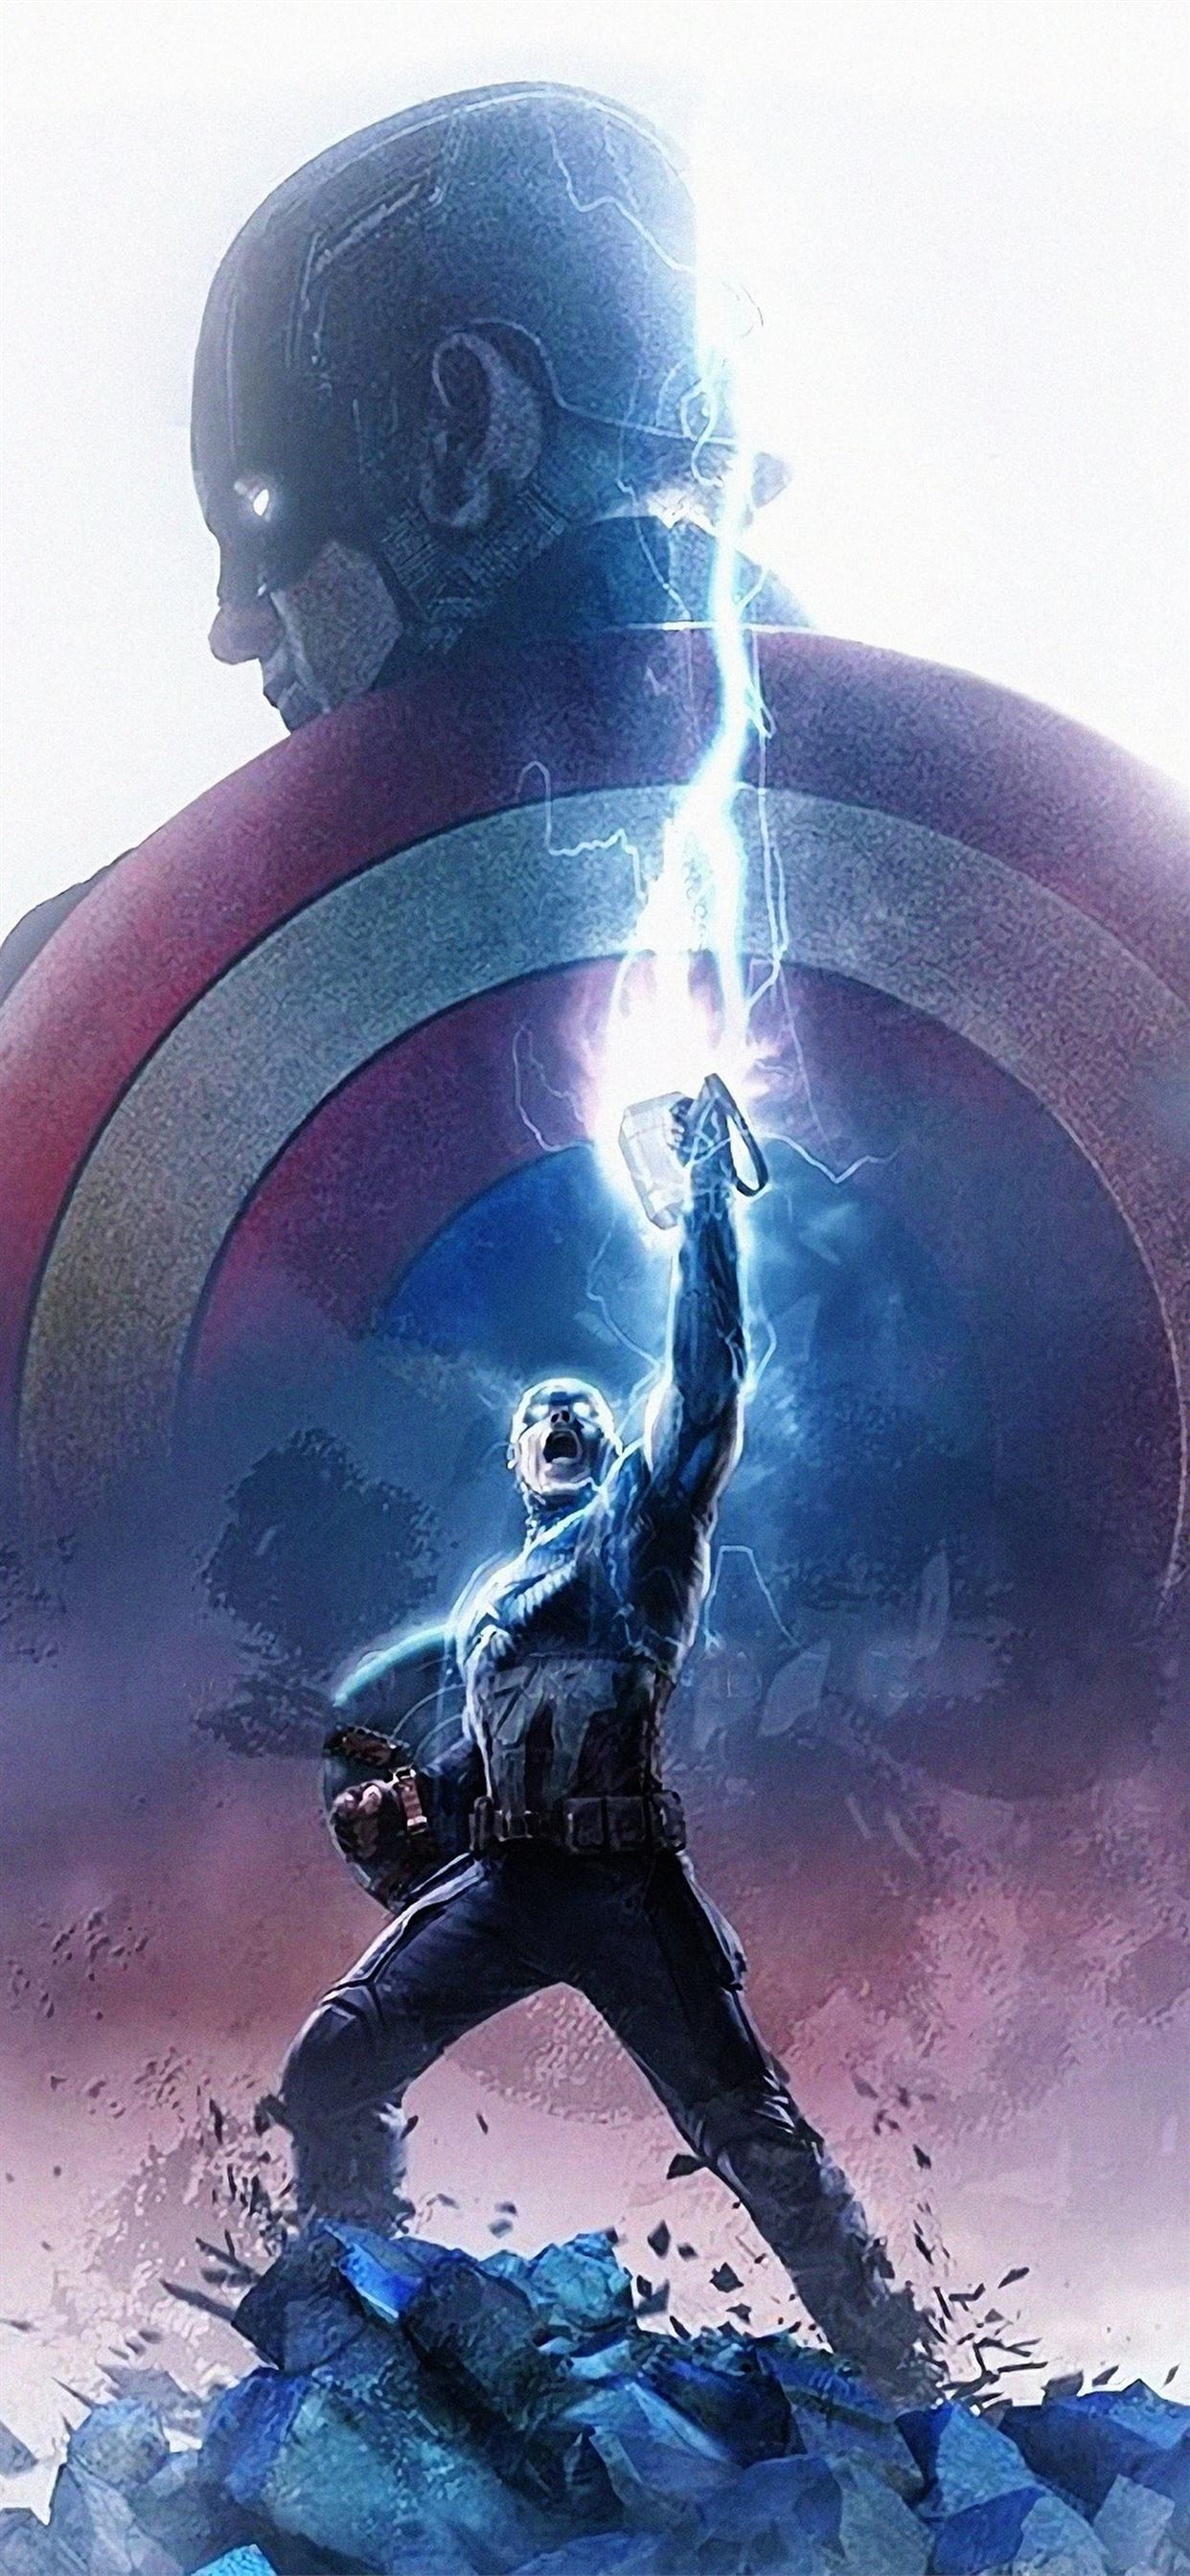 Endgame Captain America Thor Hammer Lightning 4k C... iPhone Wallpapers  Free Download